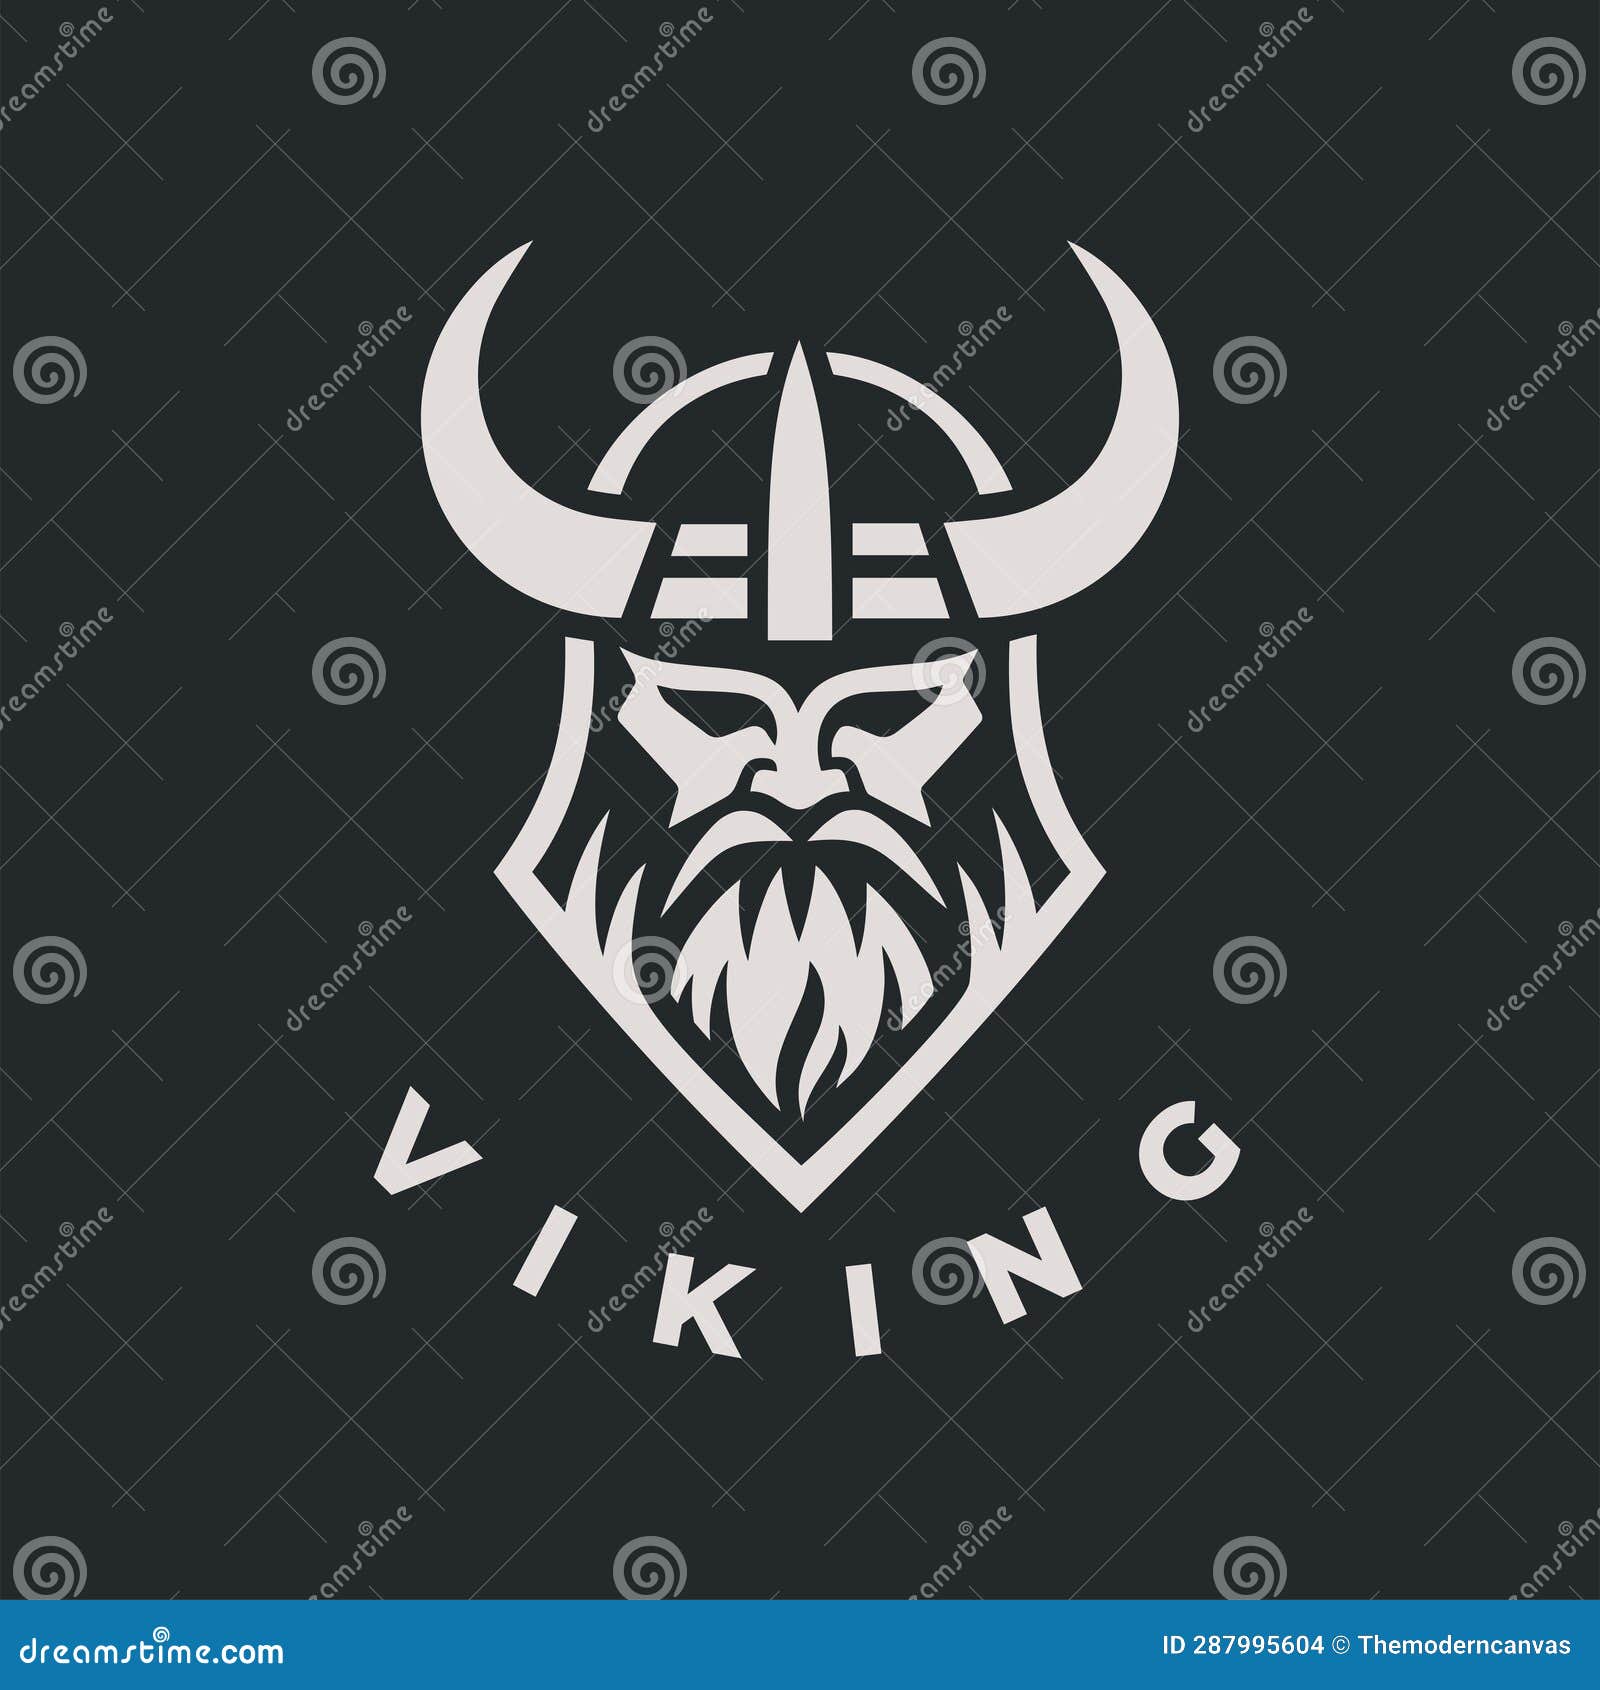 Nordic viking logo icon stock illustration. Illustration of head ...